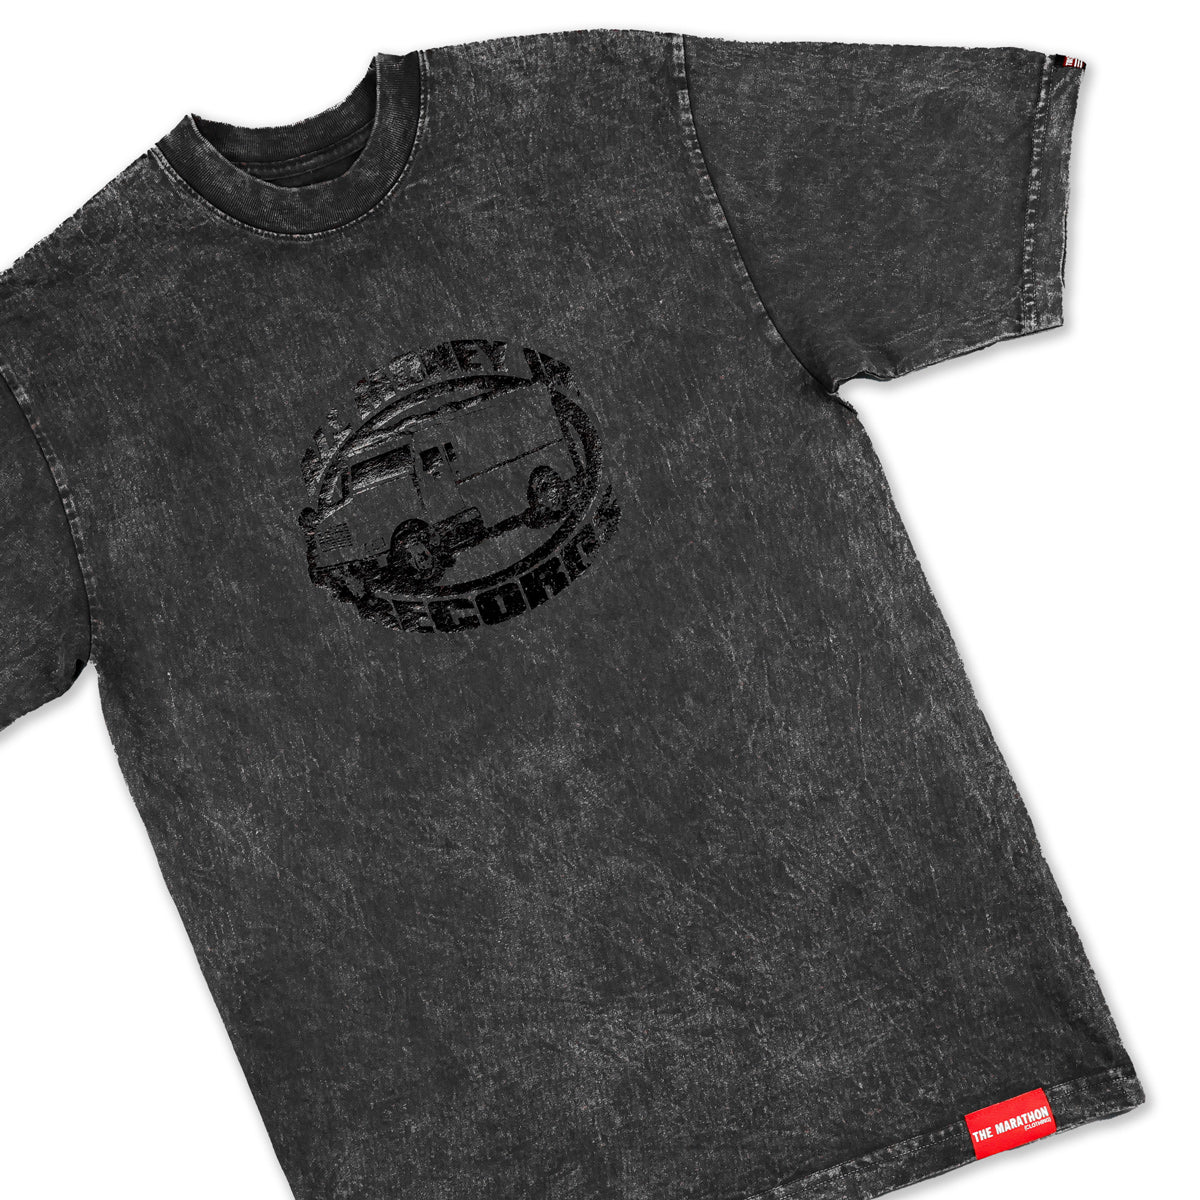 All Money Records Vintage T-Shirt - Washed Carbon Black/Black - Detail 1